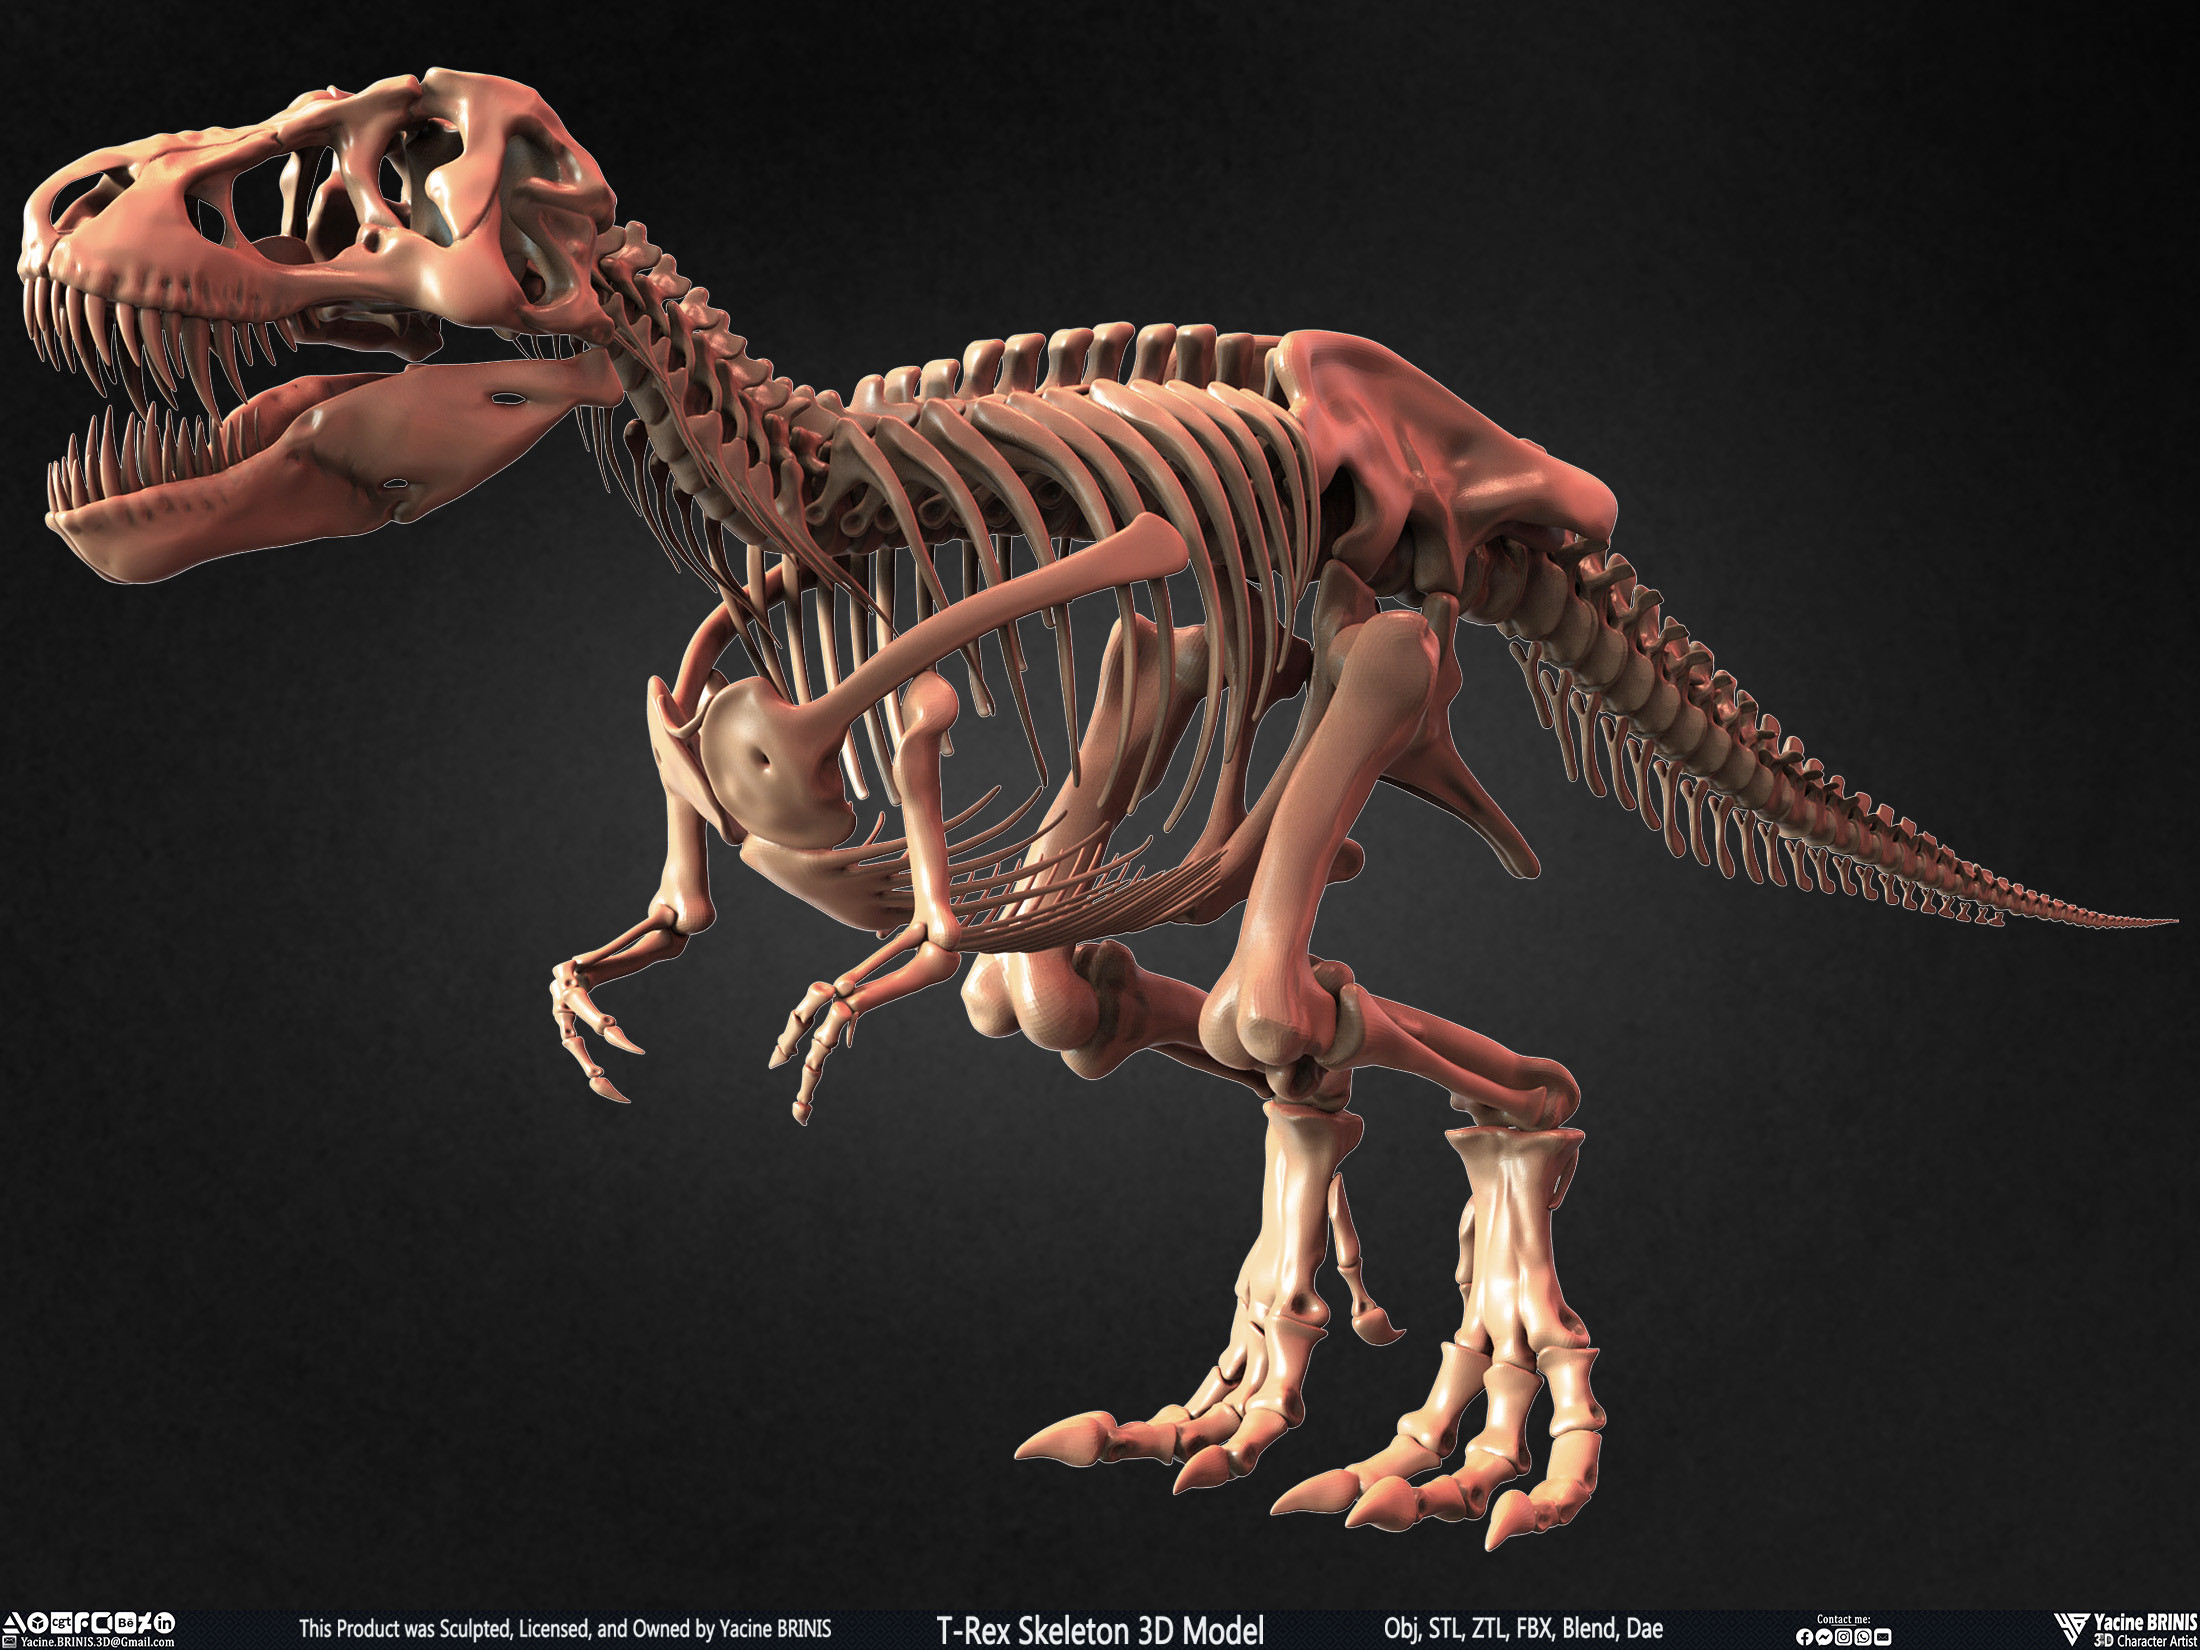 T-Rex Skeleton 3D Model (Tyrannosaurus Rex) Sculpted By Yacine BRINIS Set 011